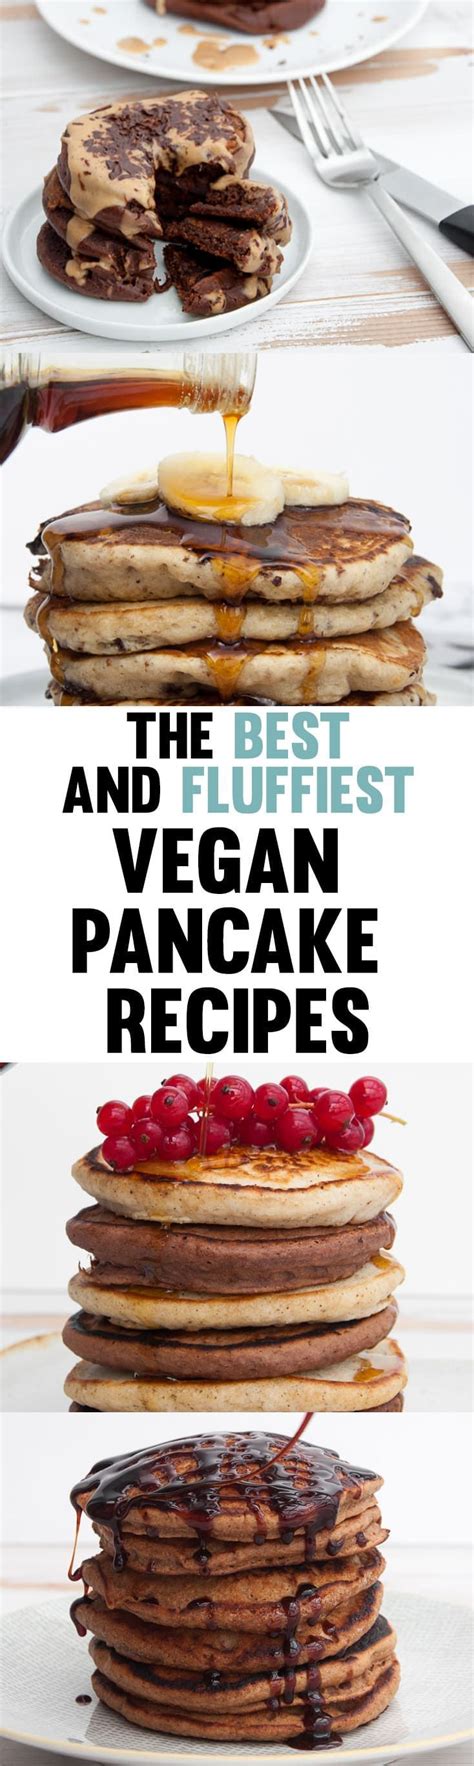 15 Vegan Pancake Recipes Elephantastic Vegan Vegan Pancake Recipes